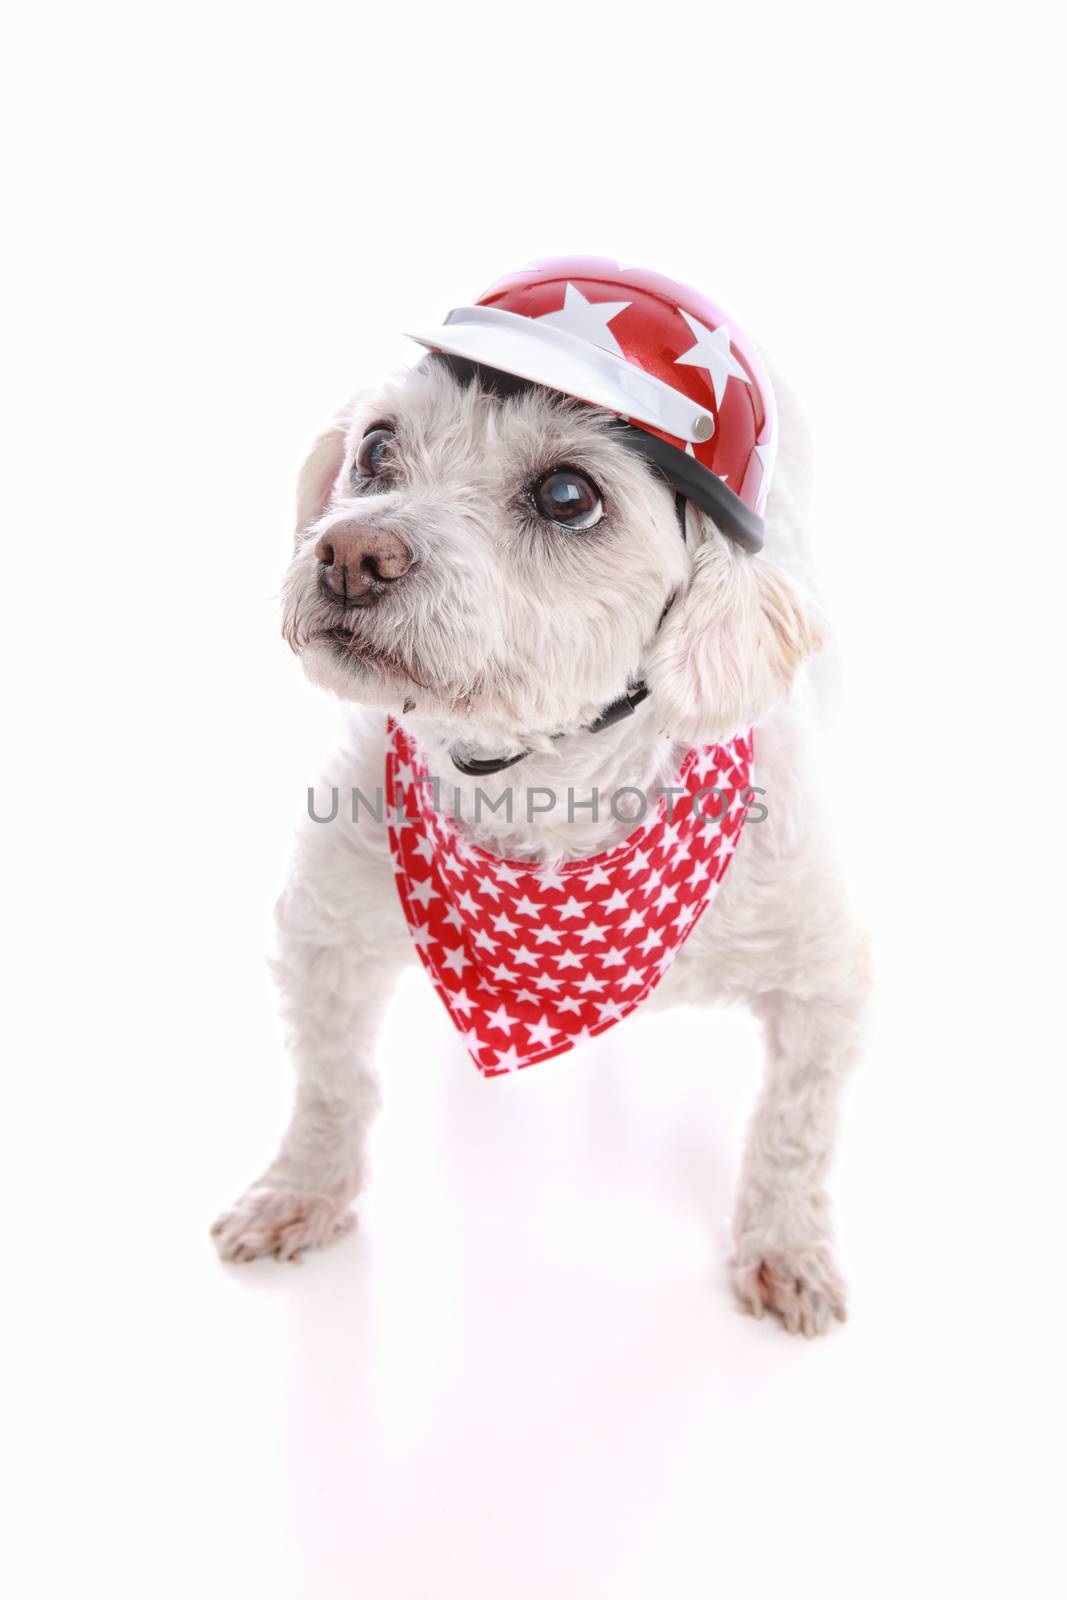 Dog wearing bike helmet and bandana by lovleah